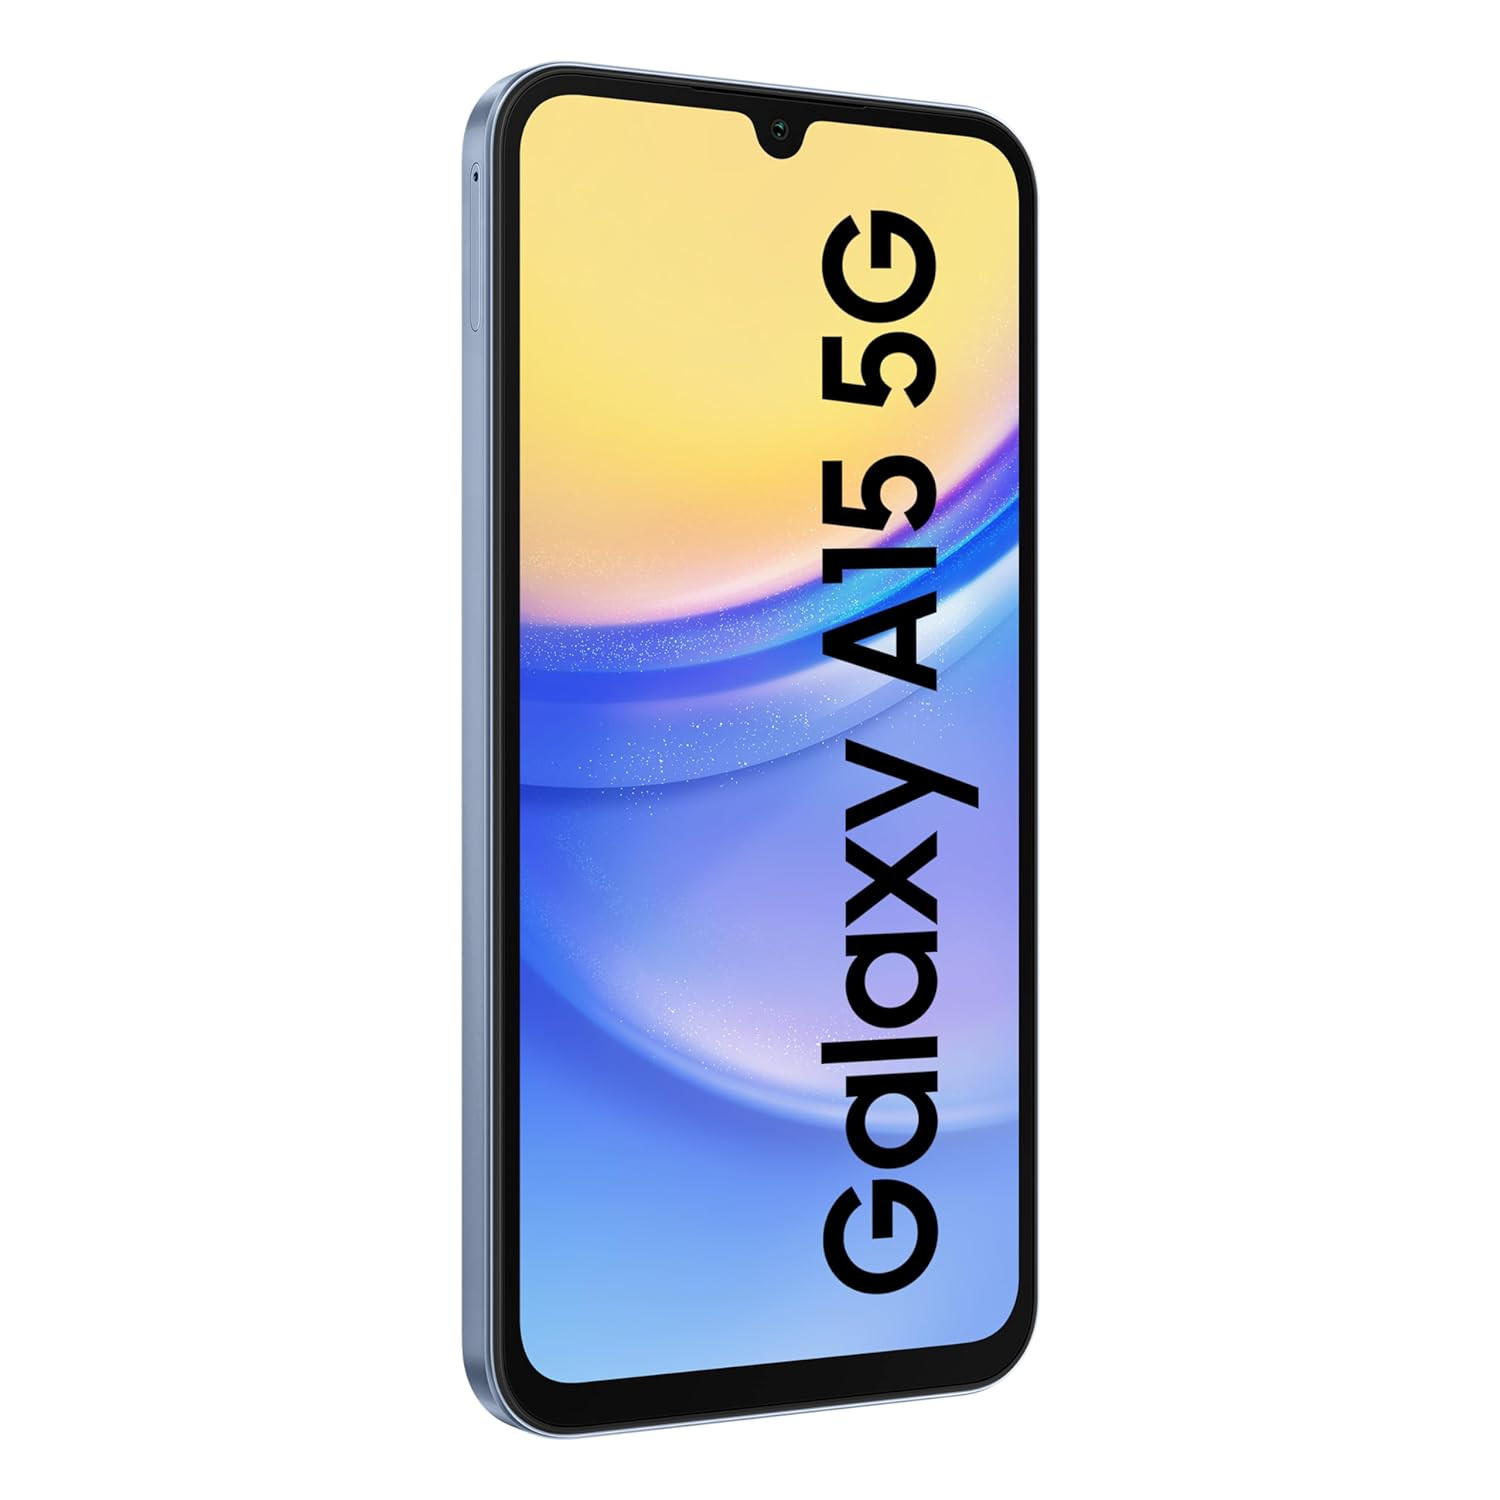 Samsung Galaxy A15 5G Blue 8GB 128GB Storage  50 MP Main Camera  Android 14 with One UI 60  16GB Expandable RAM  MediaTek Dimensity 6100  5000 mAh Battery